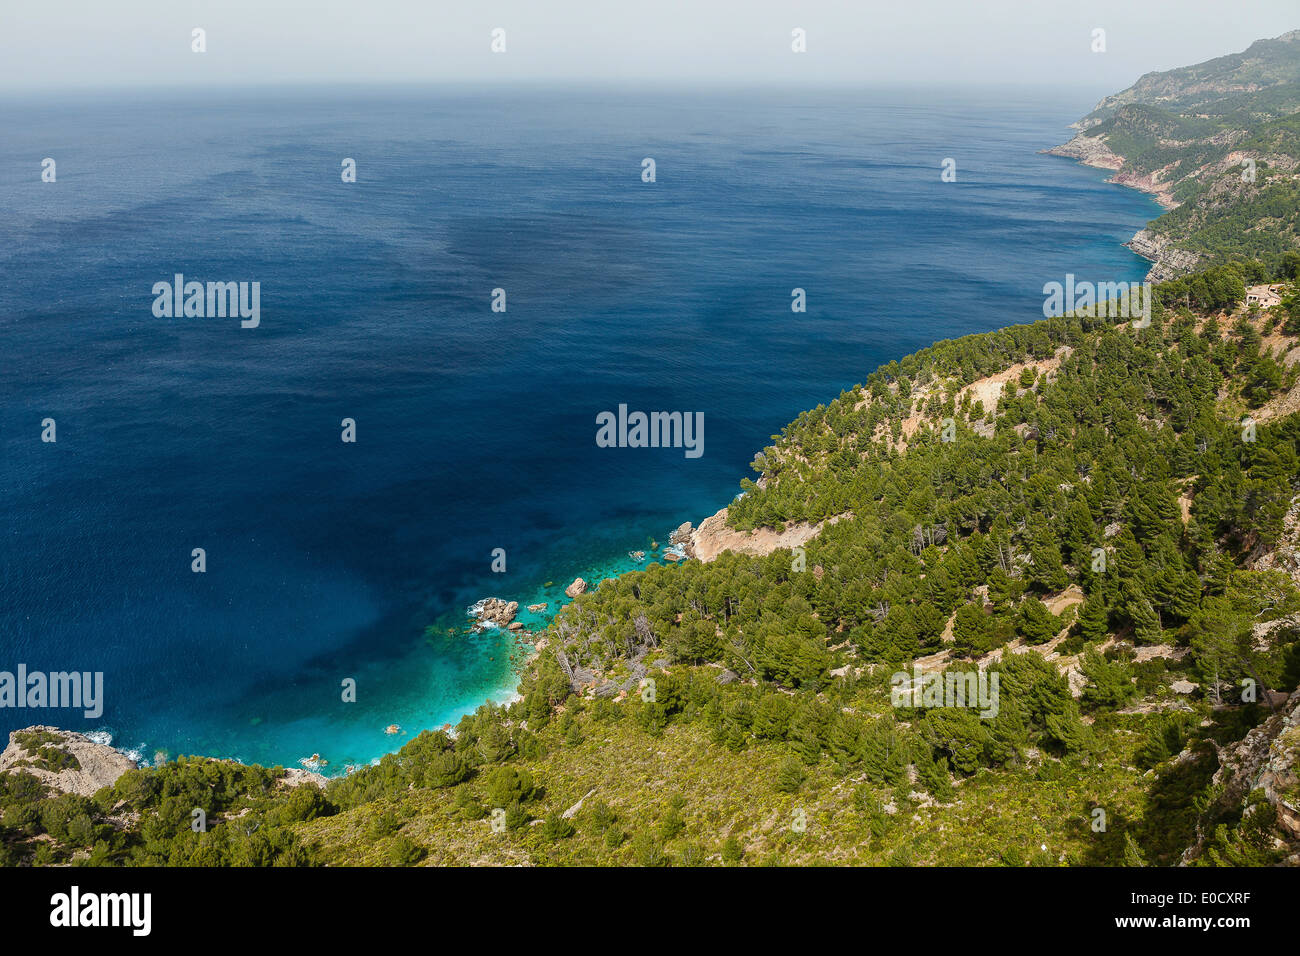 Forested coast at Mediterranean Sea, Estellencs, Mallorca, Spain Stock Photo